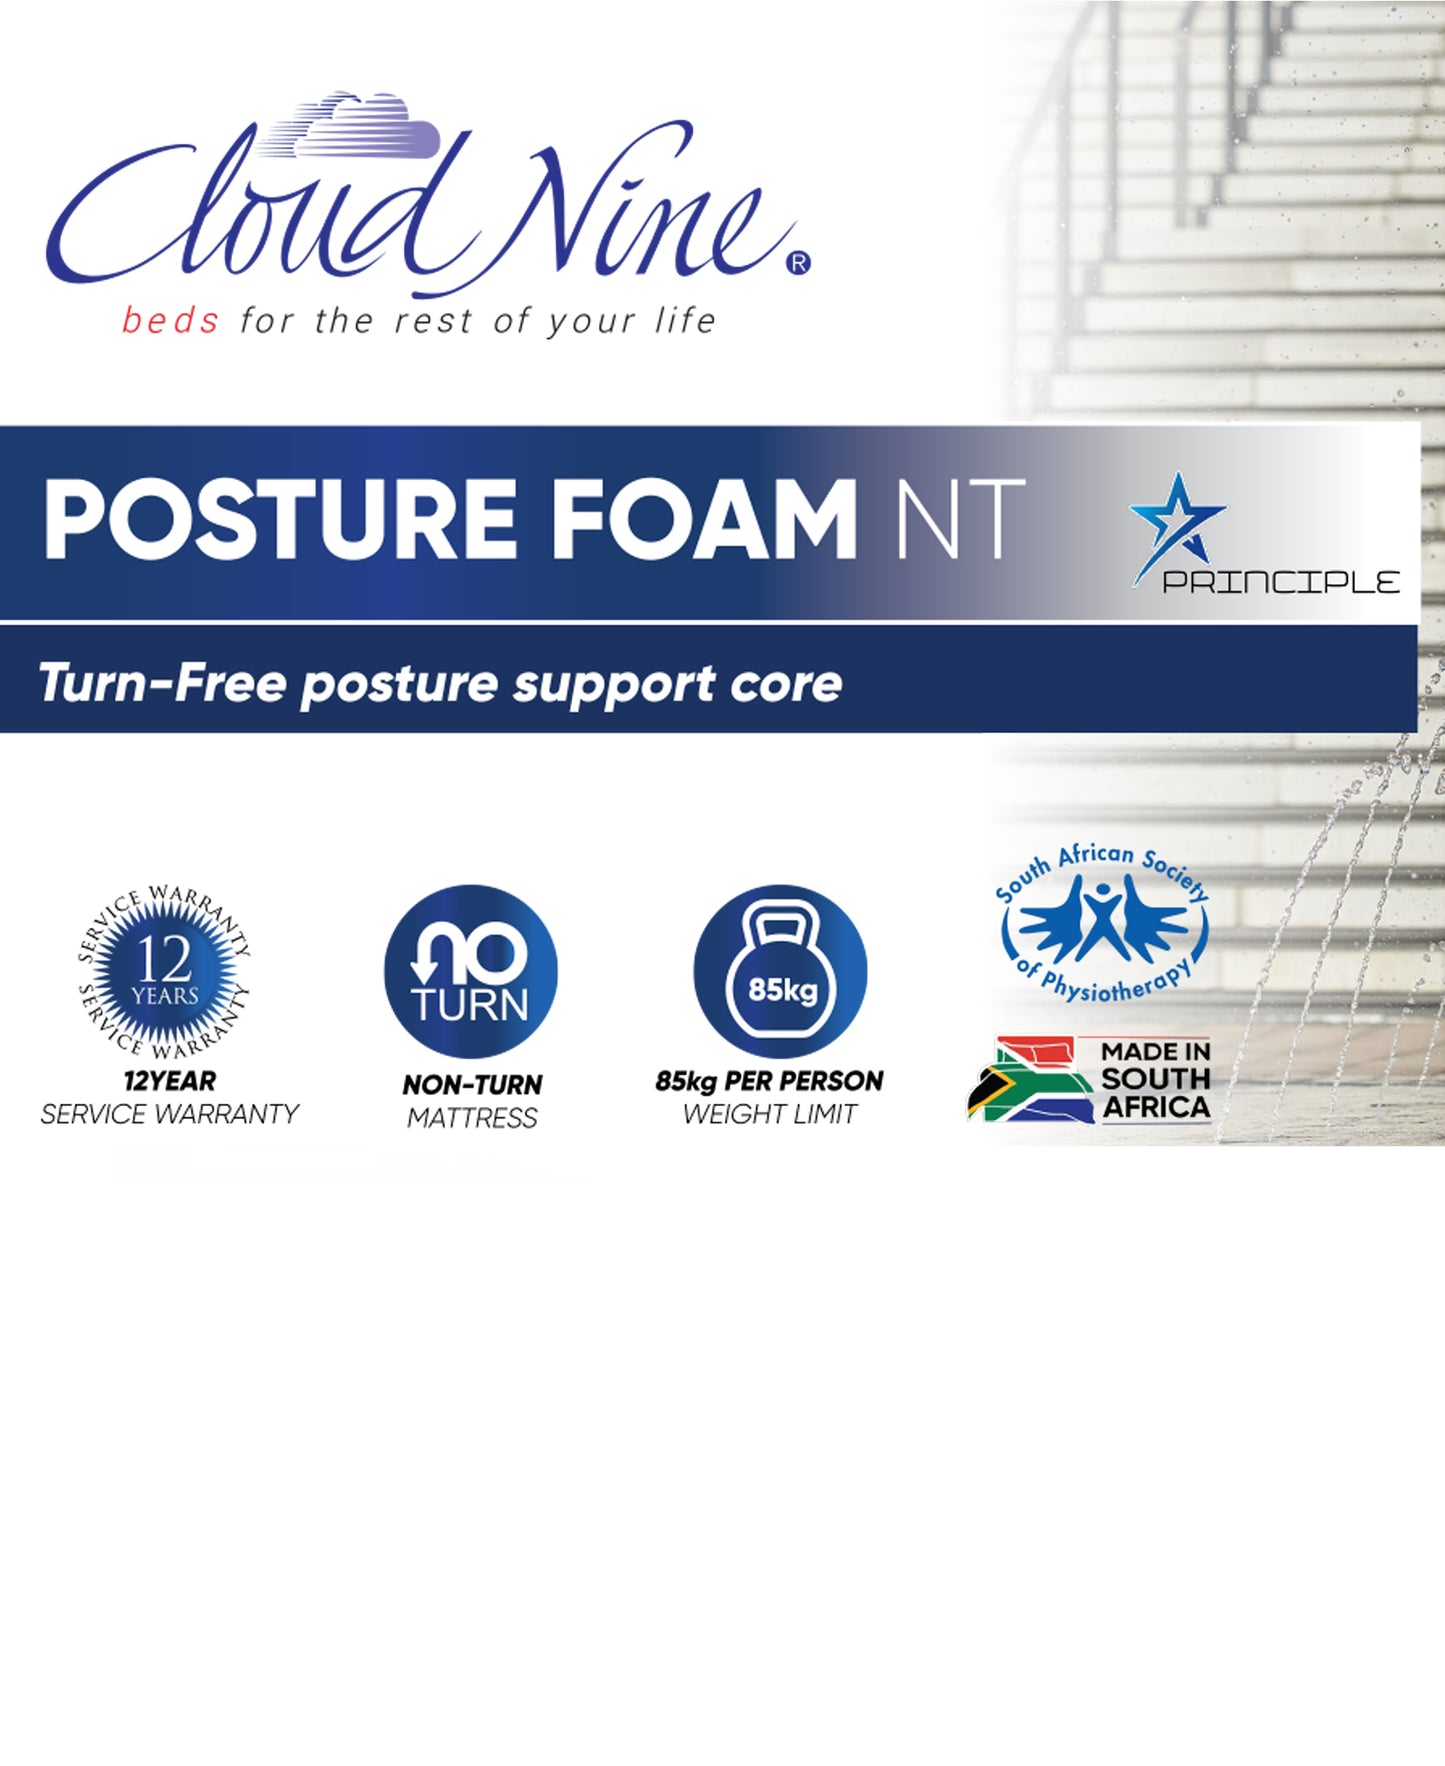 Cloud Nine Posture Foam NT Mattress